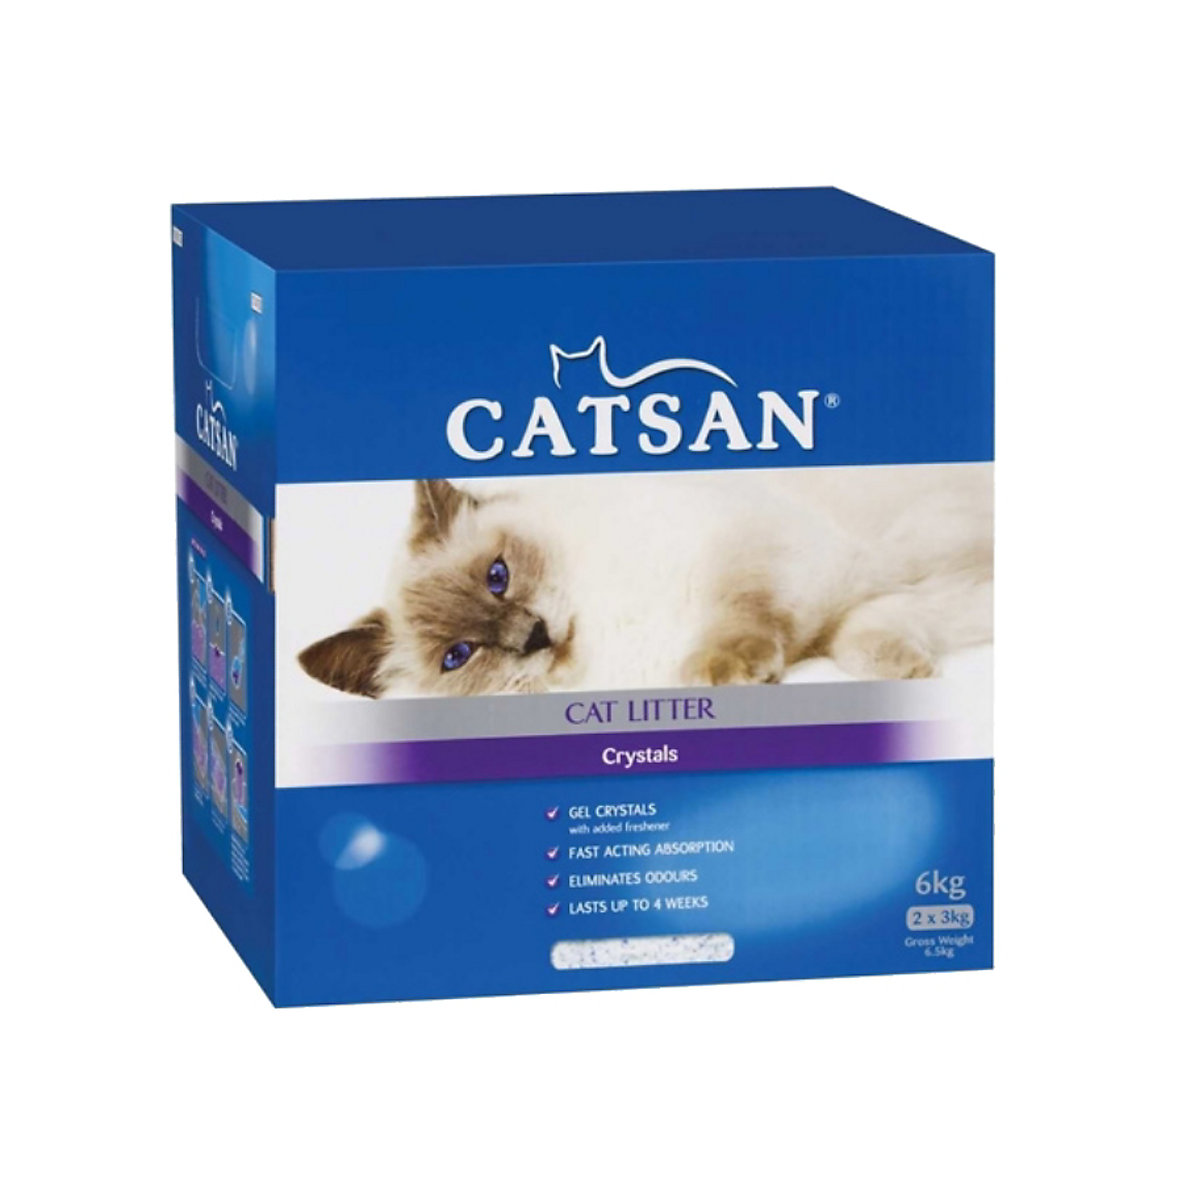 $25 Save $7 Catsan Cat Litter Crystals 6kg